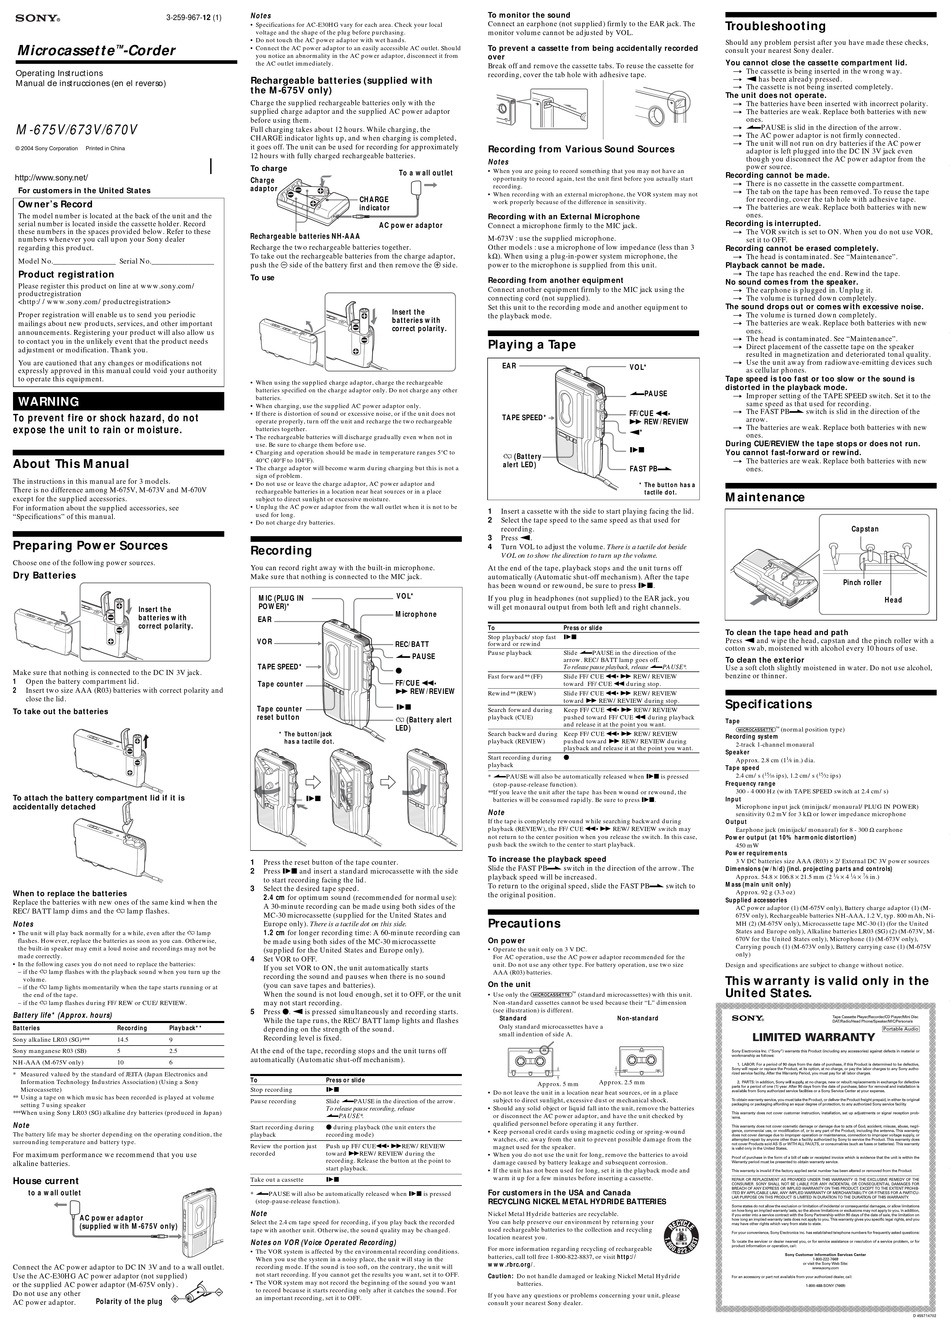 SONY M-670V MICROCASSETTE RECORDER OPERATING INSTRUCTIONS | ManualsLib